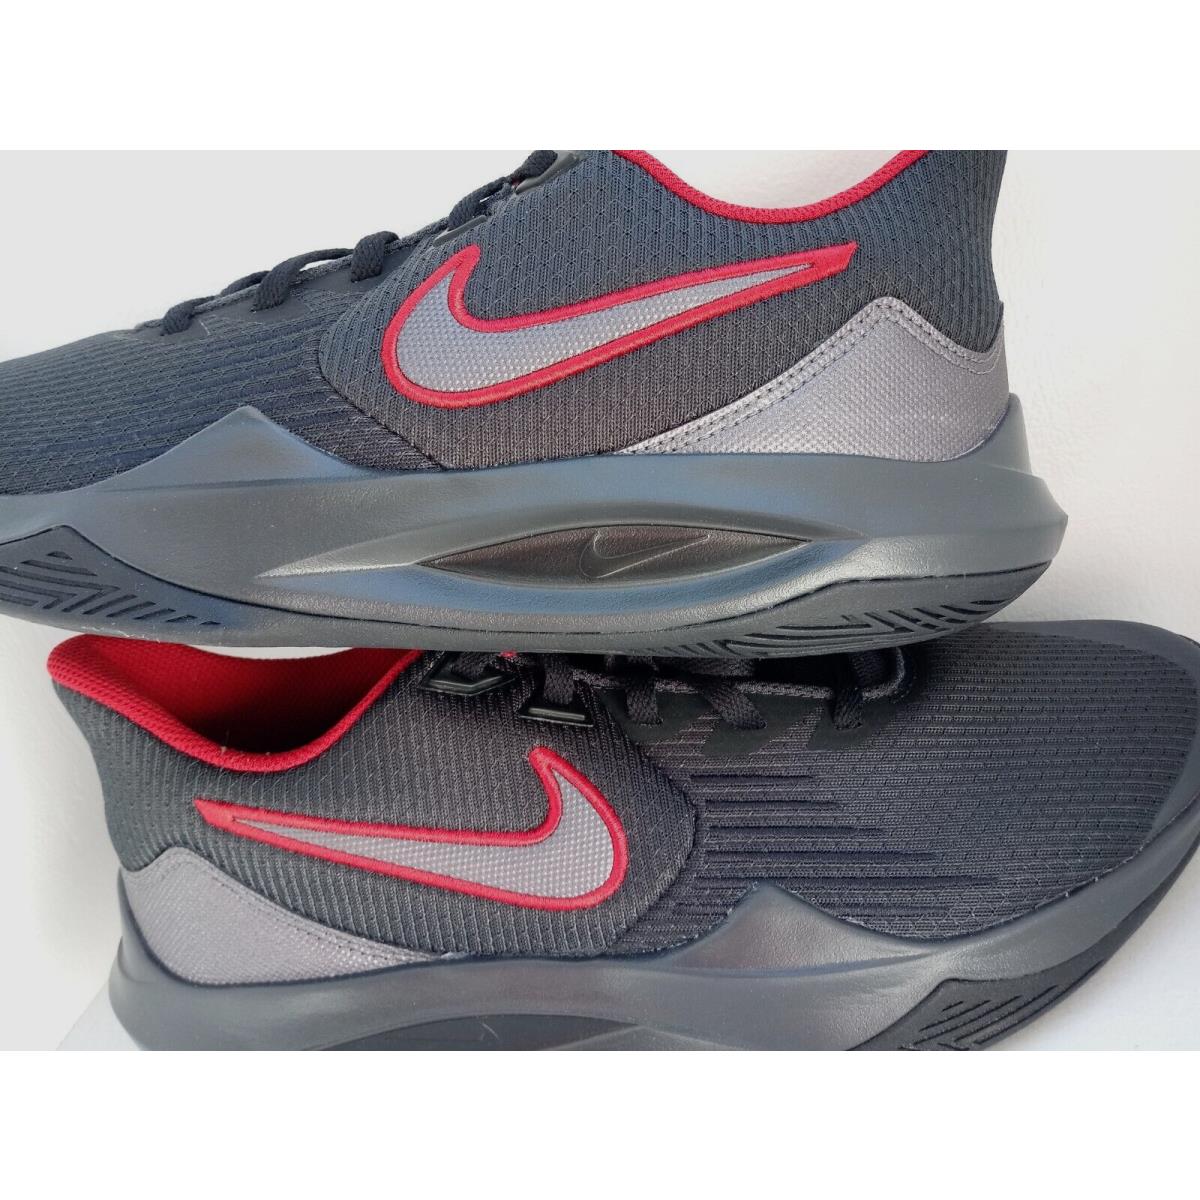 Nike shoes Precision - ANTHRACITE/MTLC DARK GREY 5